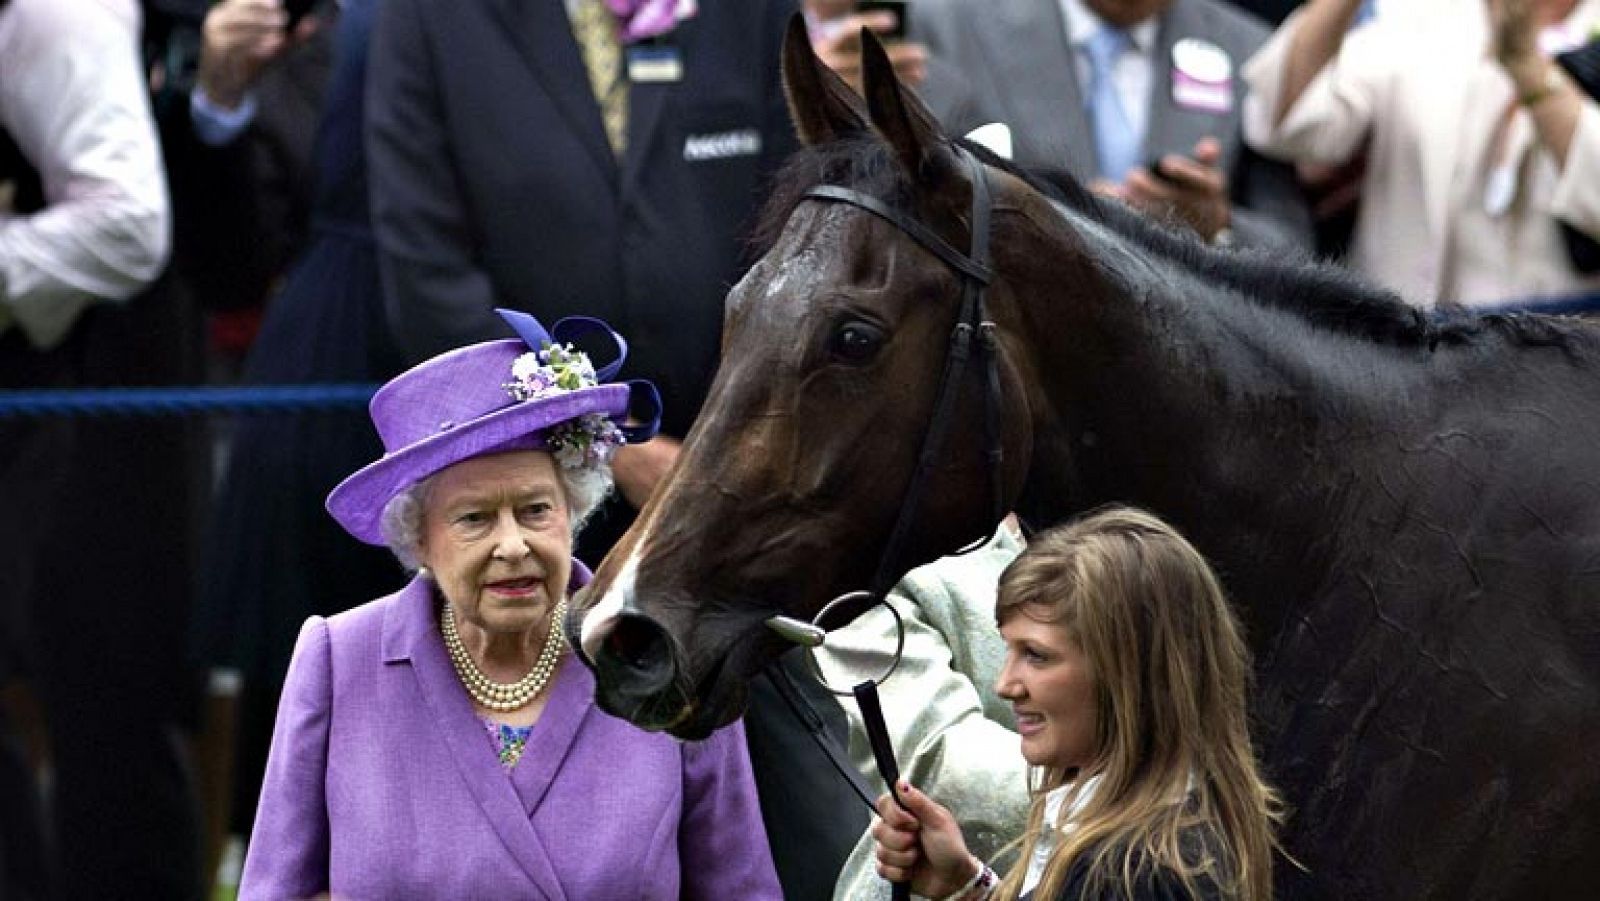 Telediario 1: La reina Isabel II gana la prestigiosa carrera de caballos de Ascot | RTVE Play